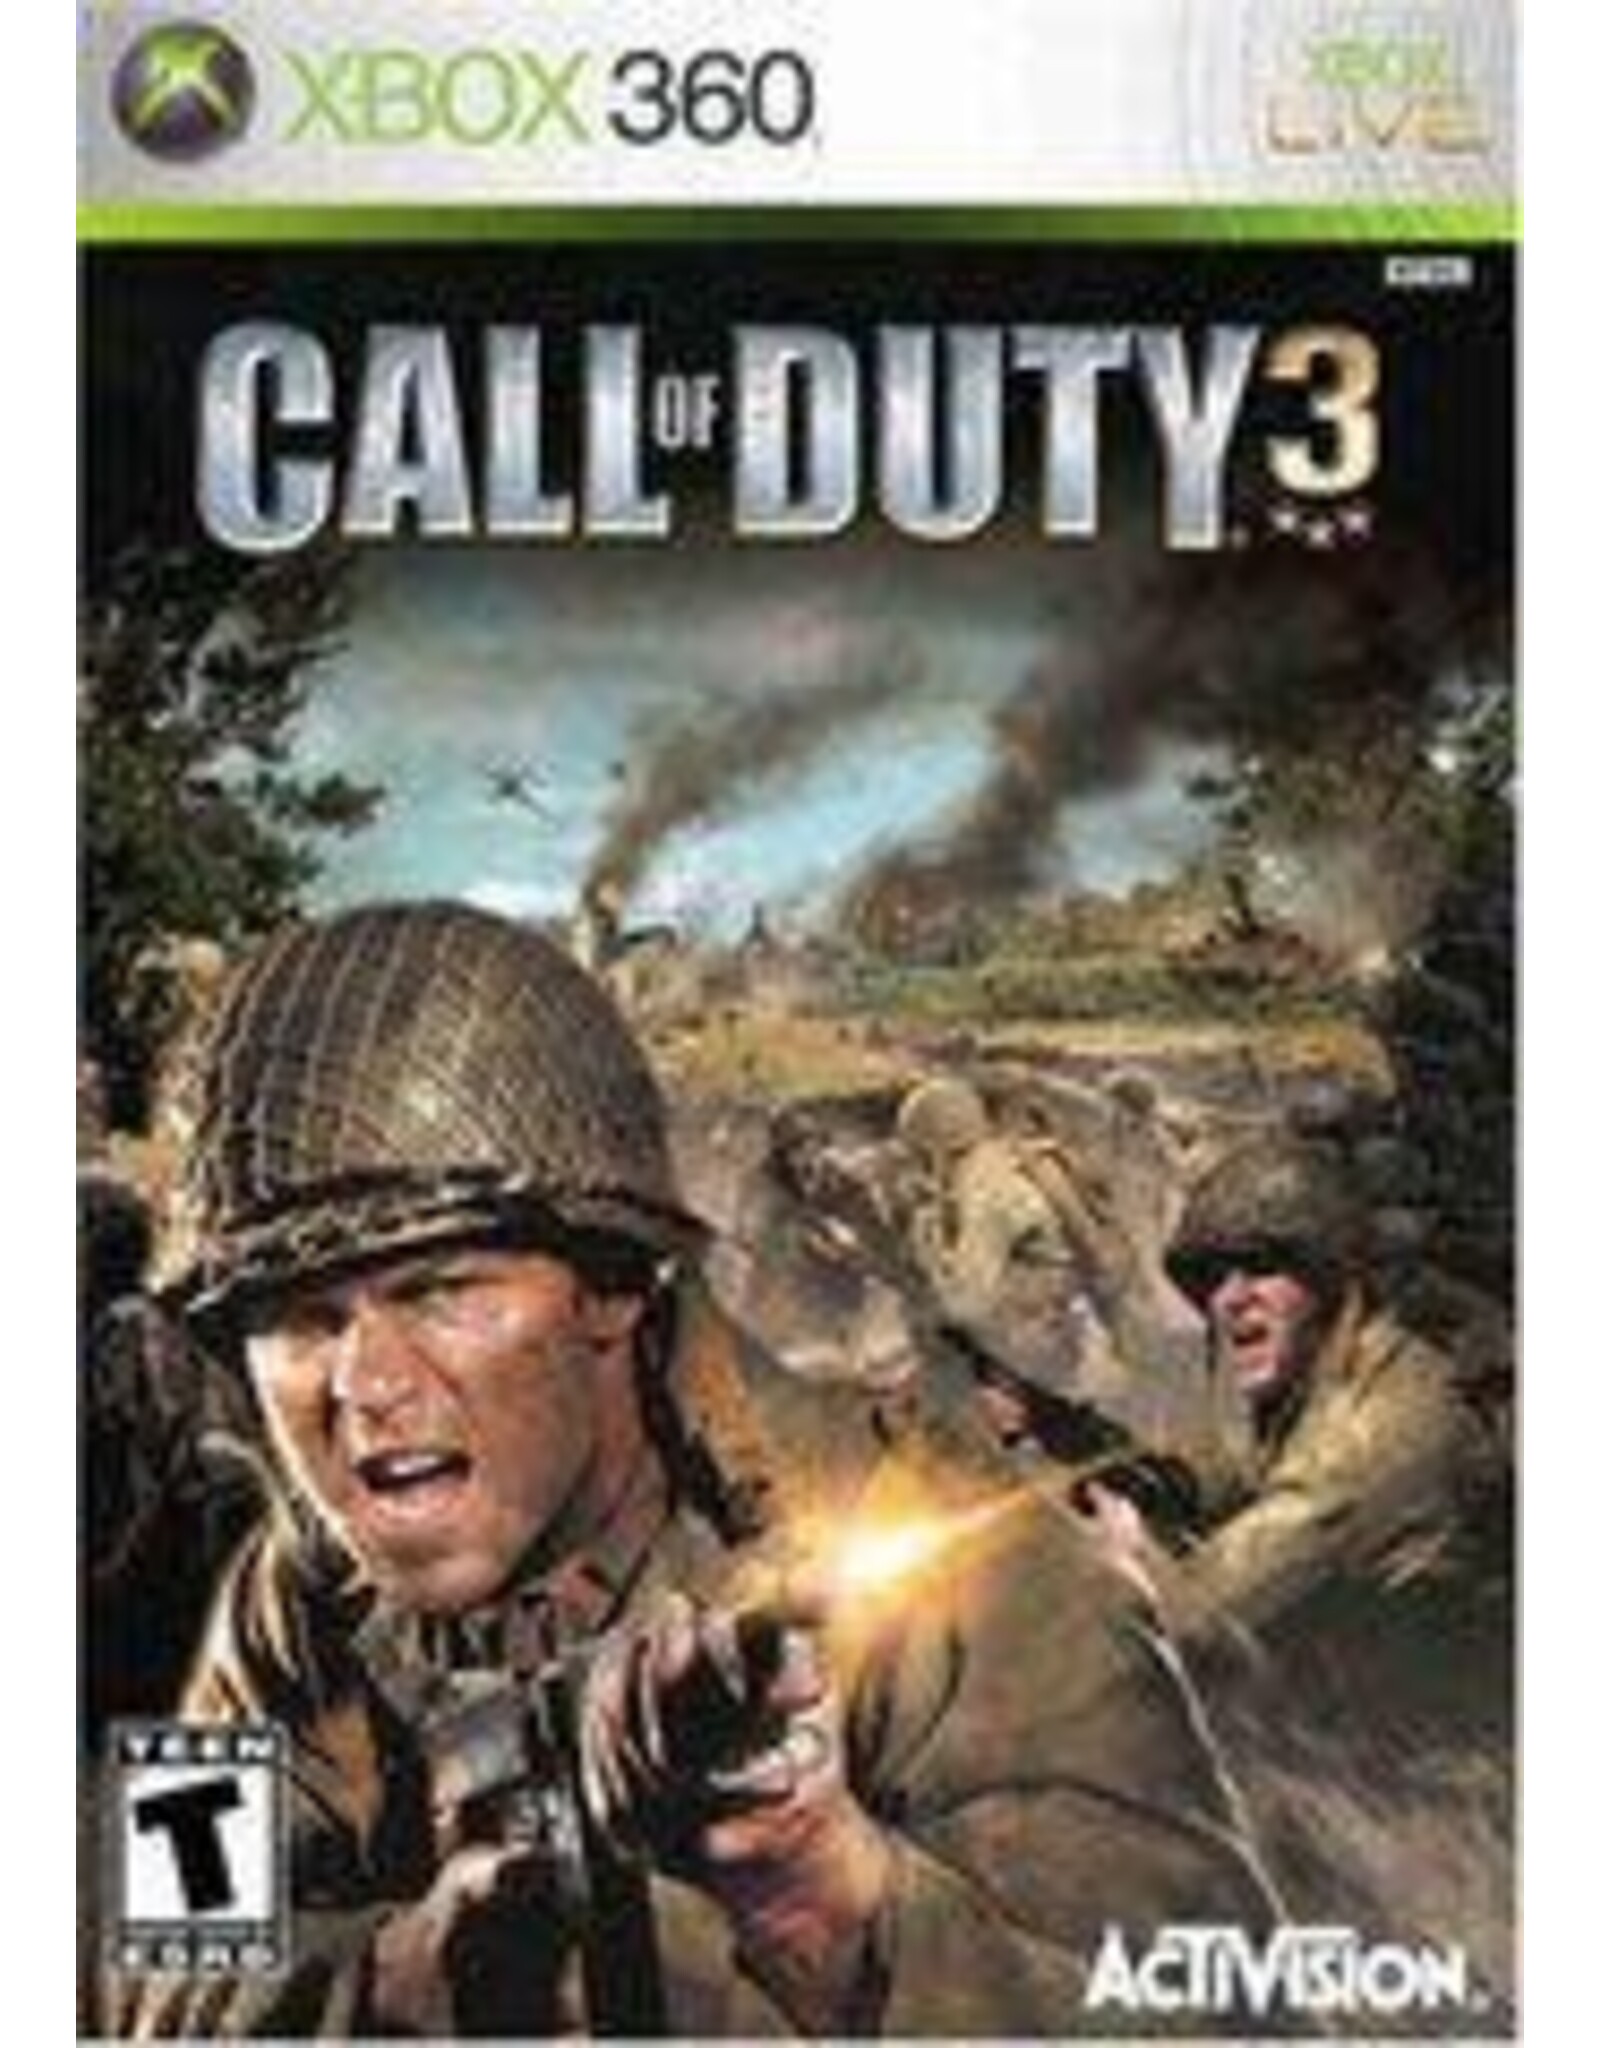 Xbox 360 Call of Duty 3 (No Manual)